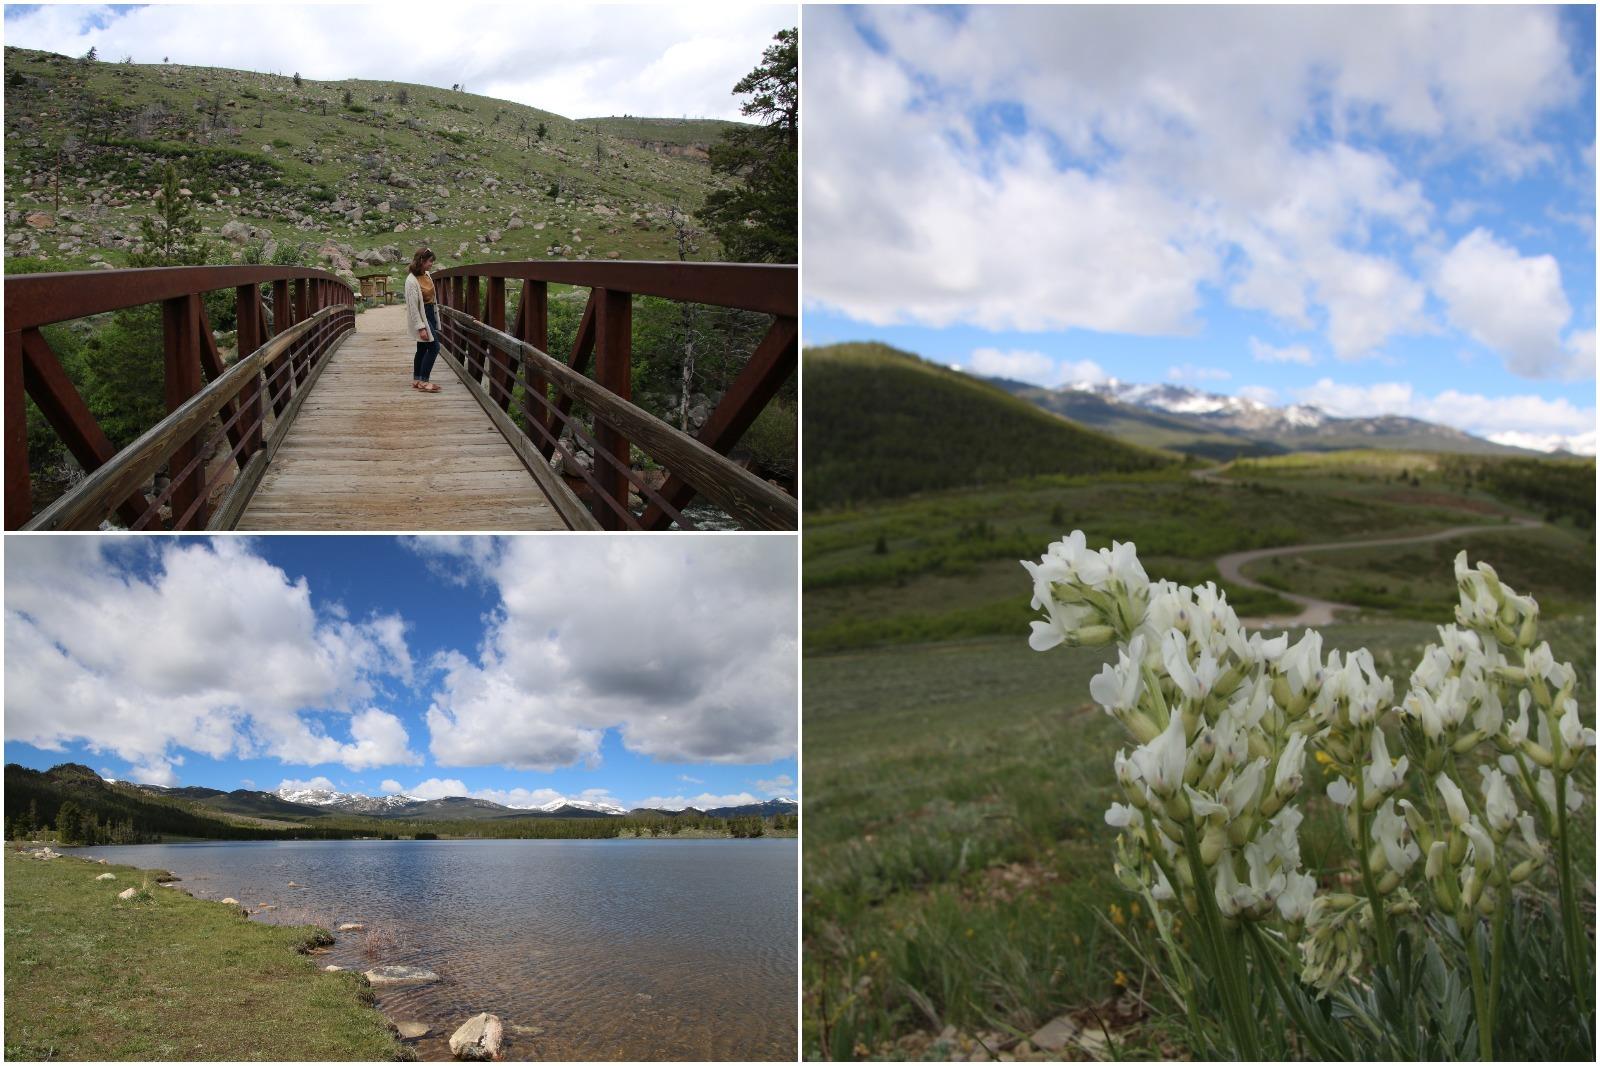 Enjoy hiking around the alpine lakes on the Loop Road in Wyoming